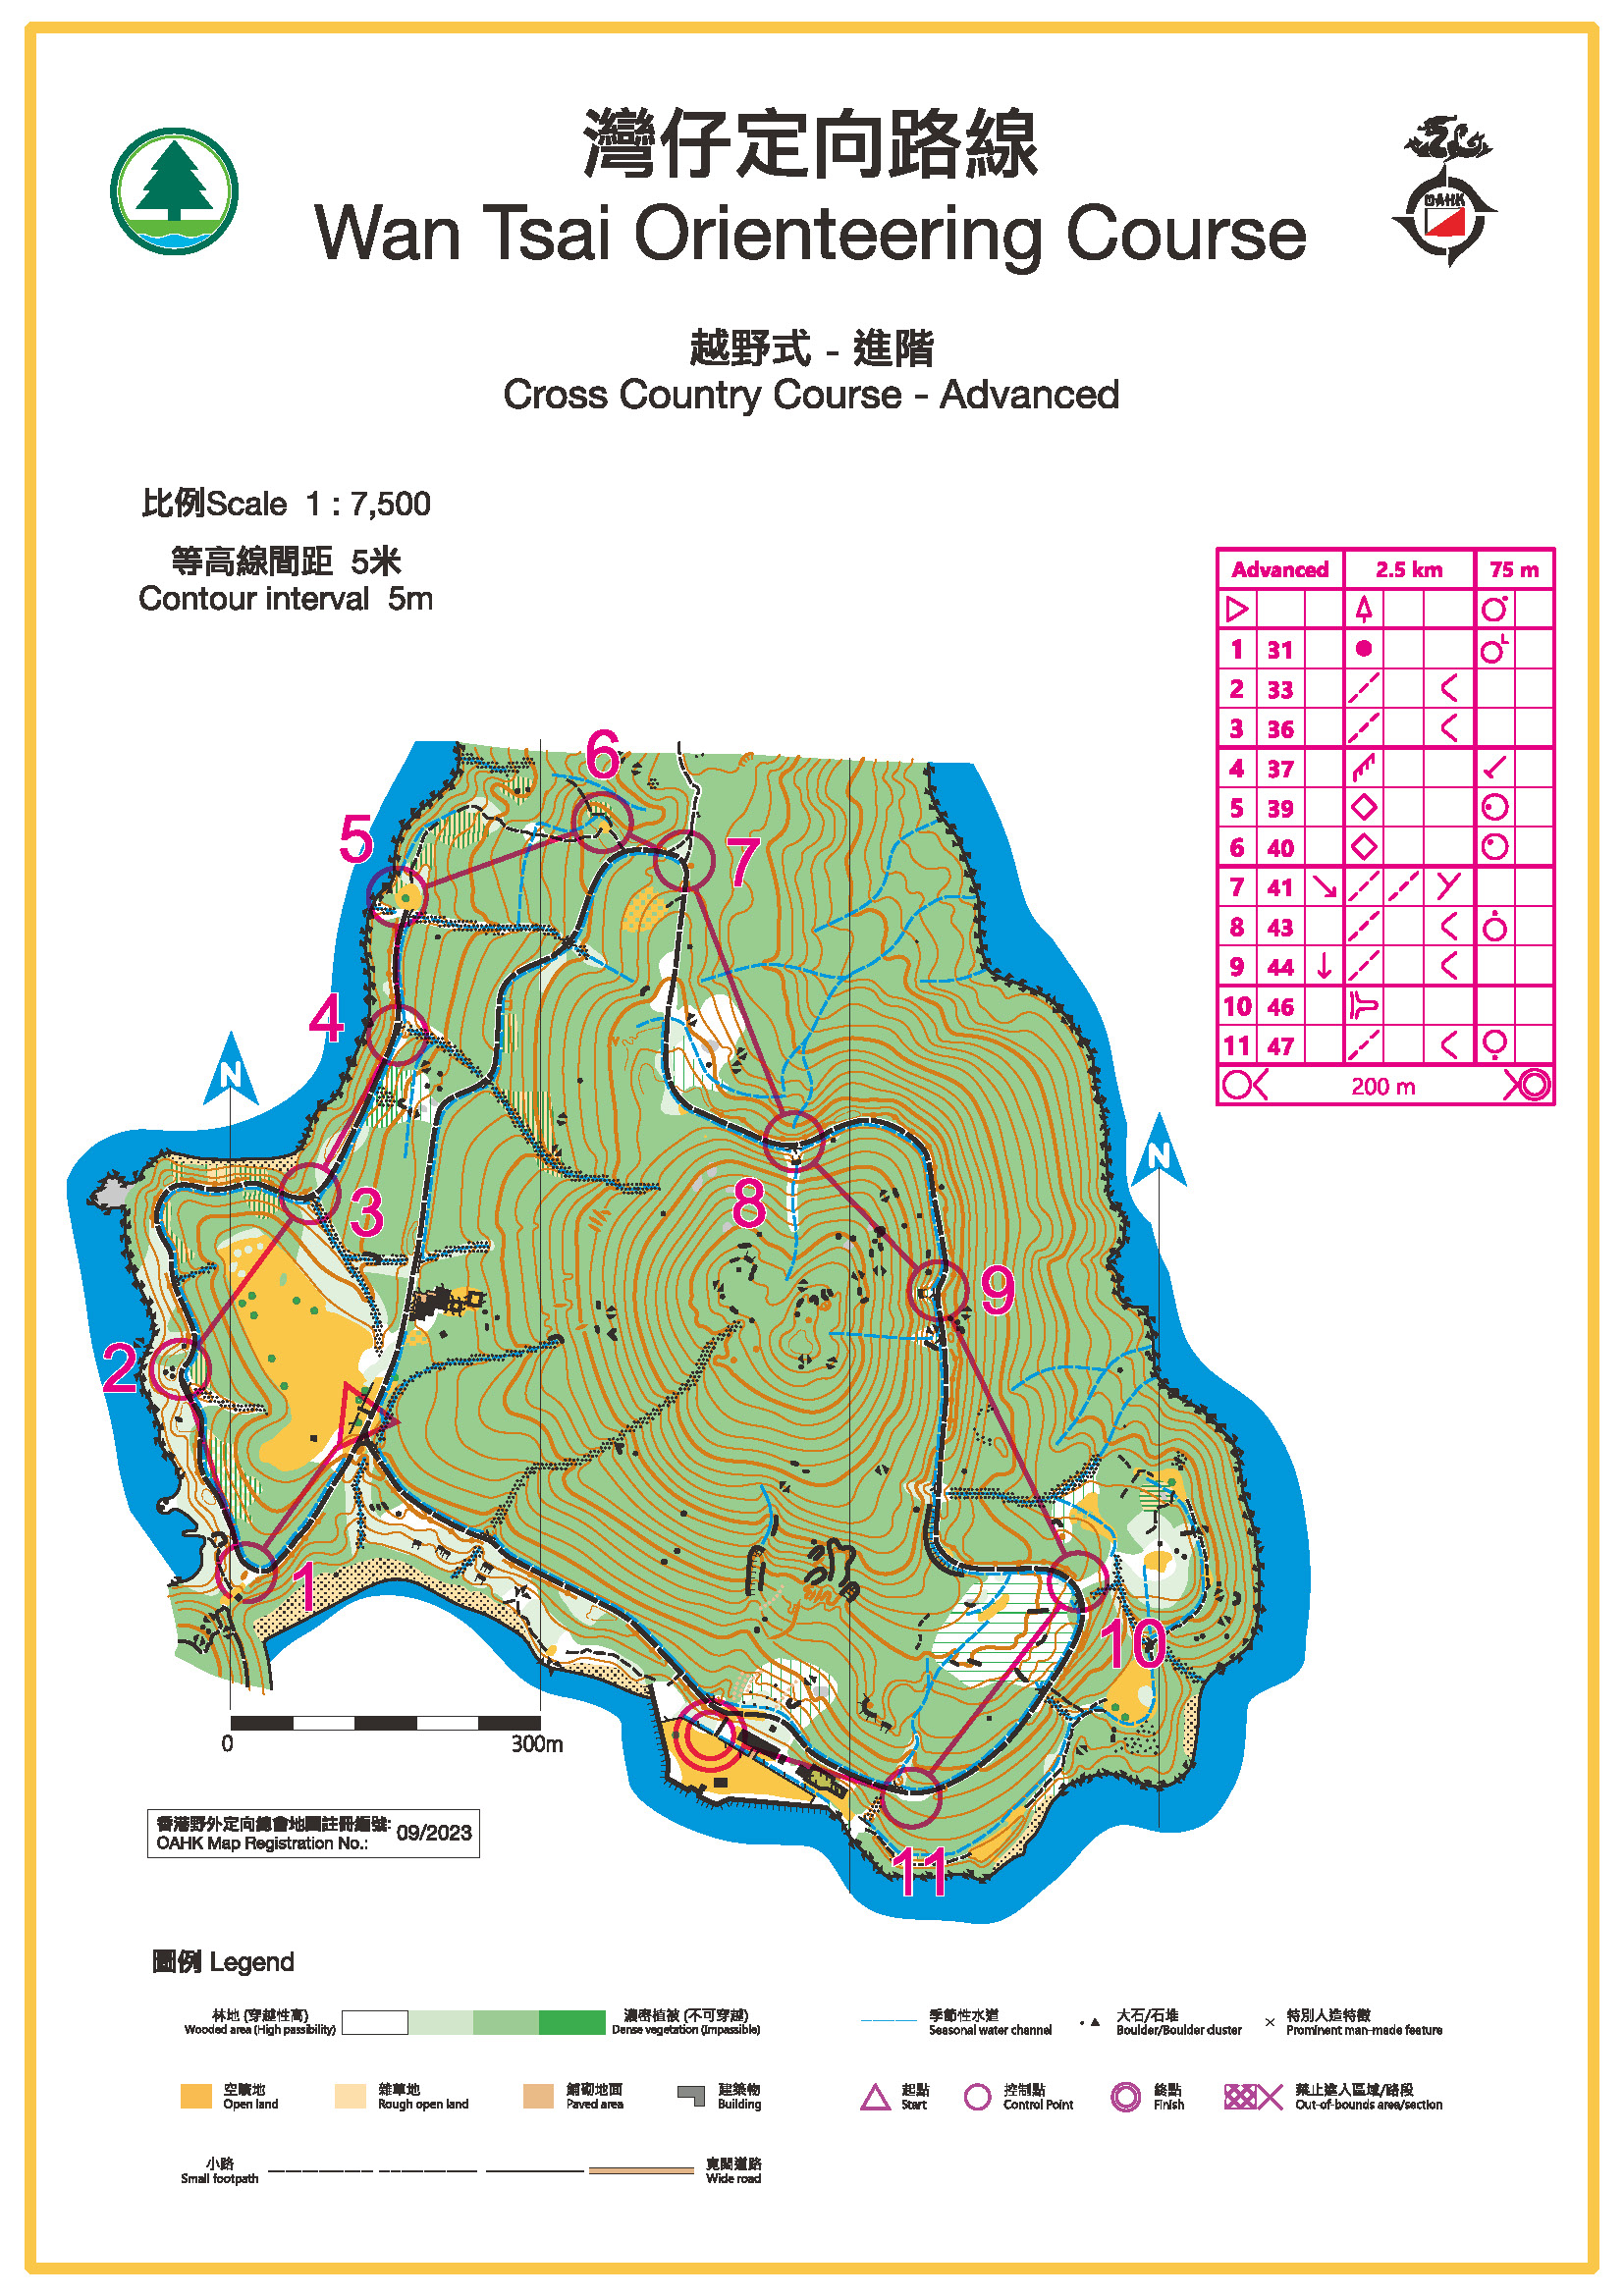 Map for Wan Tsai Orienteering Course - Advanced